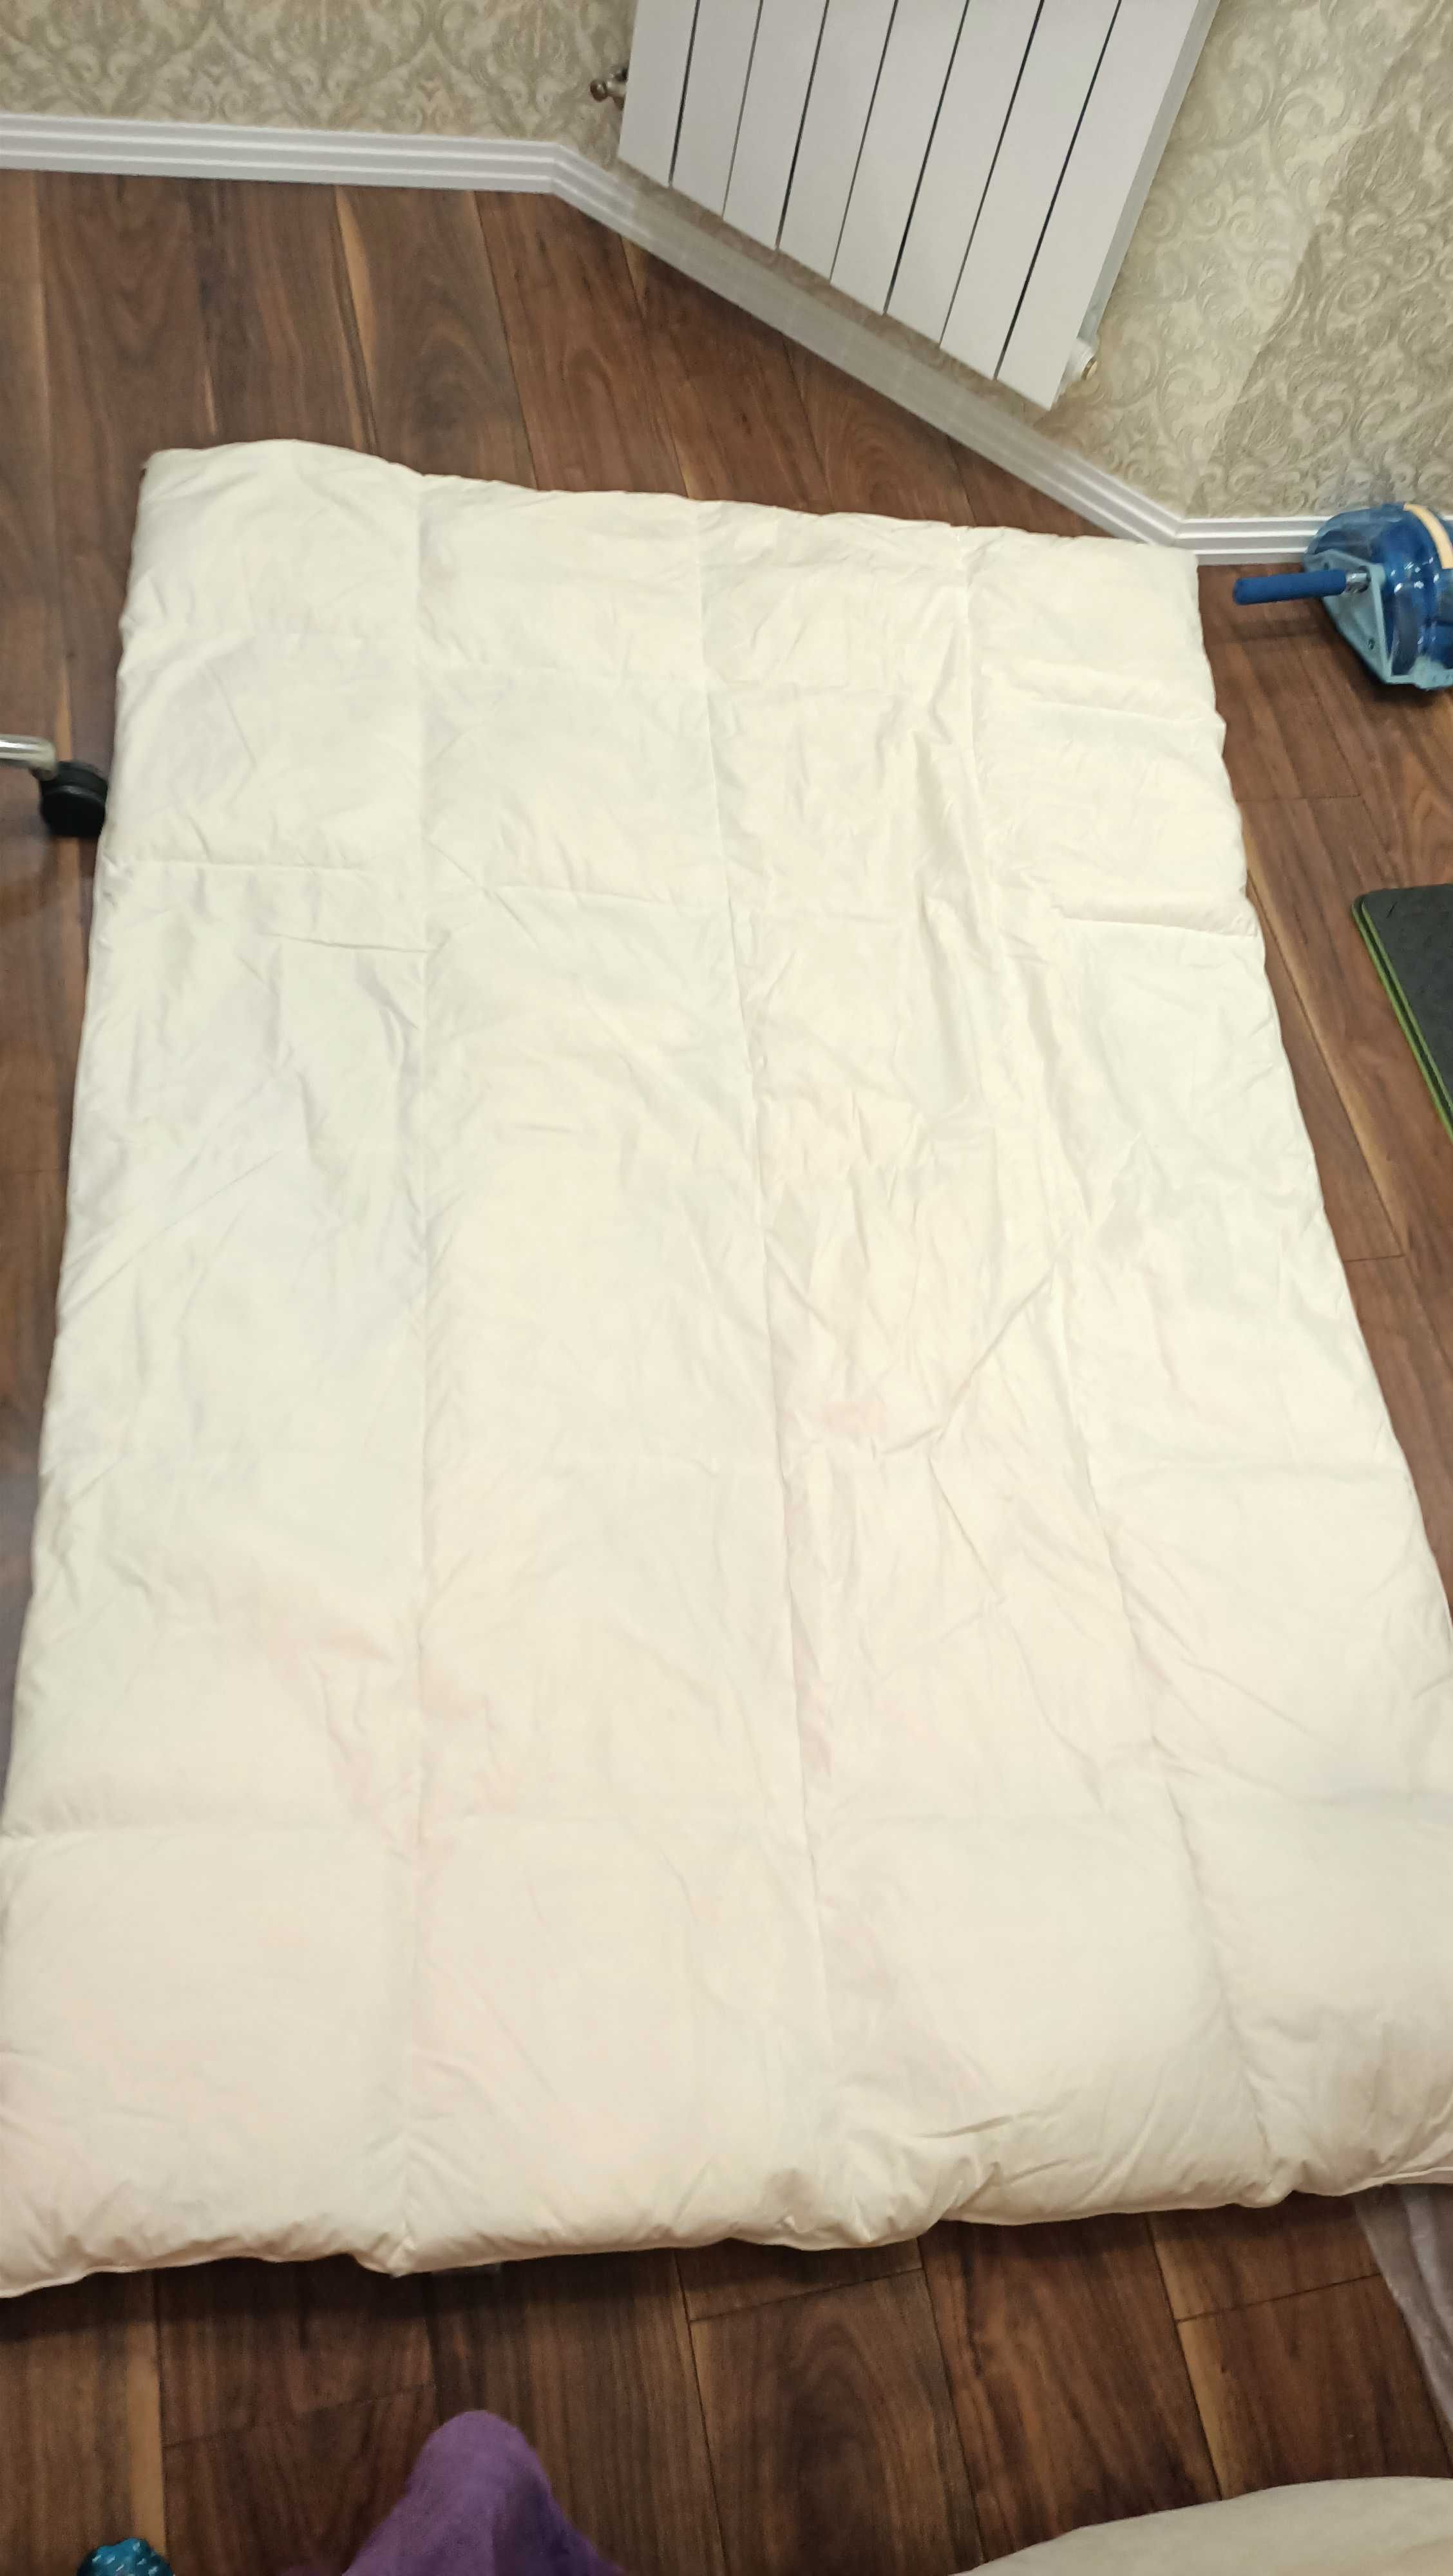 Пуховое одеяло размер 135 Х 200 см, производство Германия